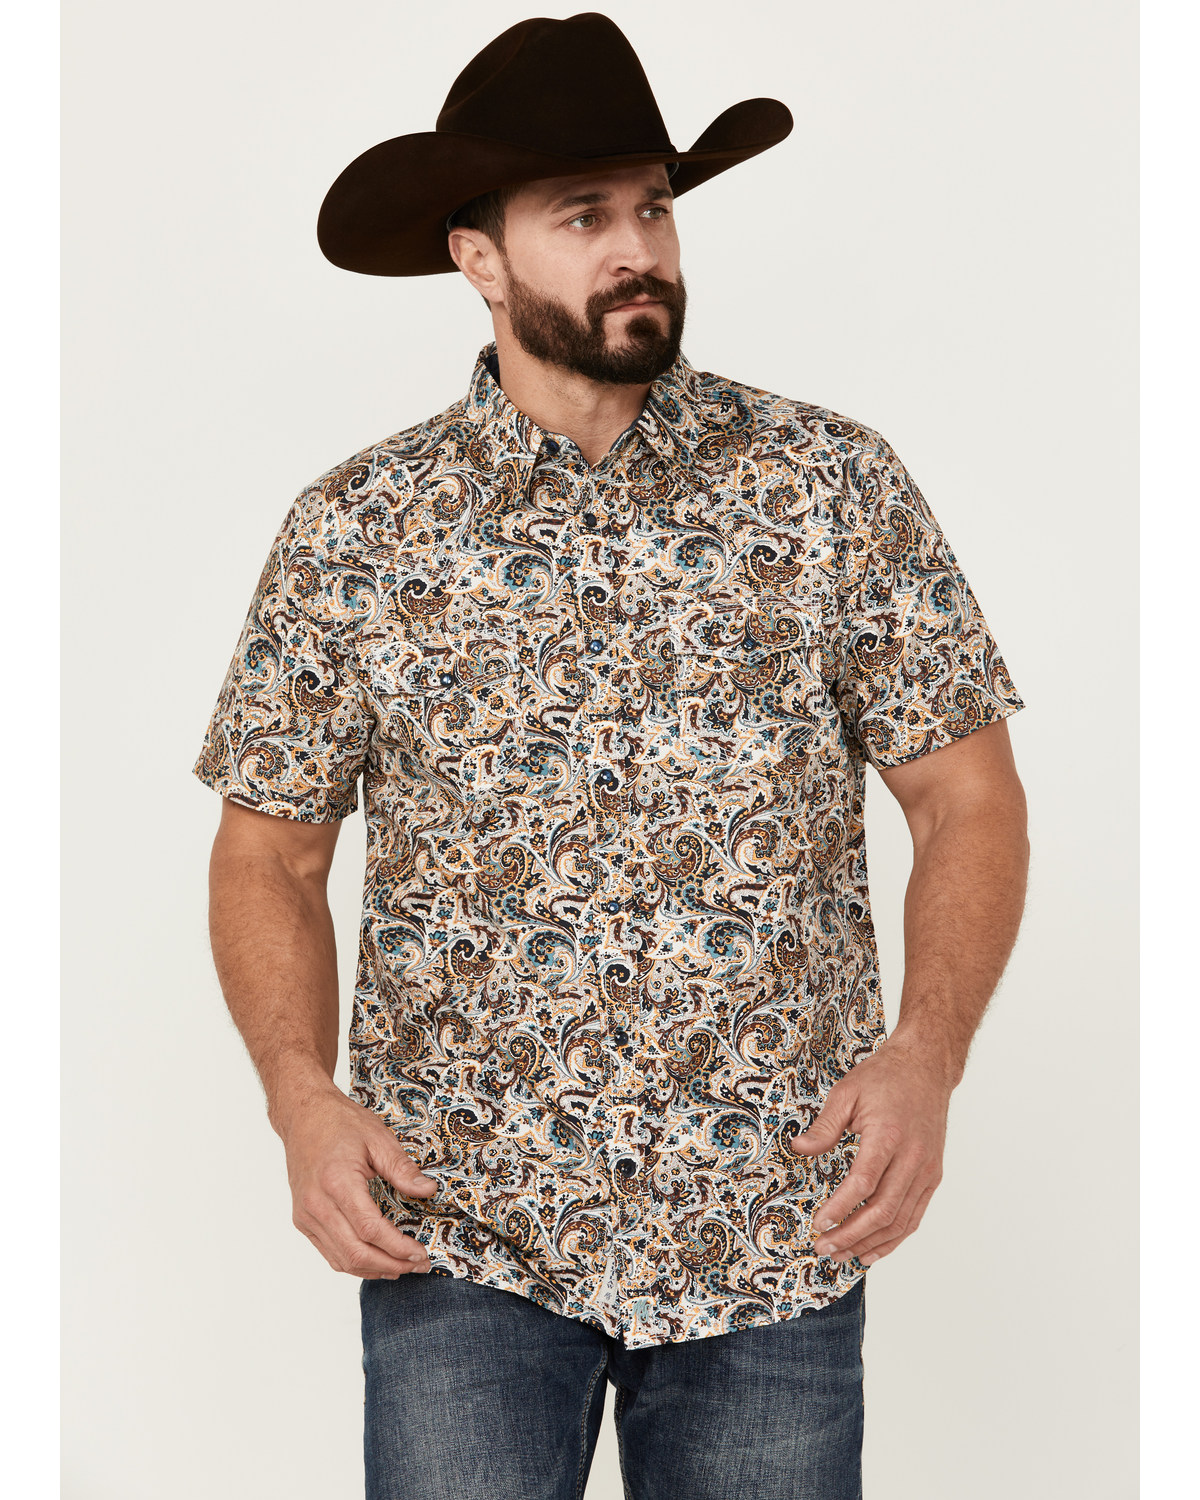 Moonshine Spirit Men's Sicilly Paisley Print Short Sleeve Snap Western Shirt